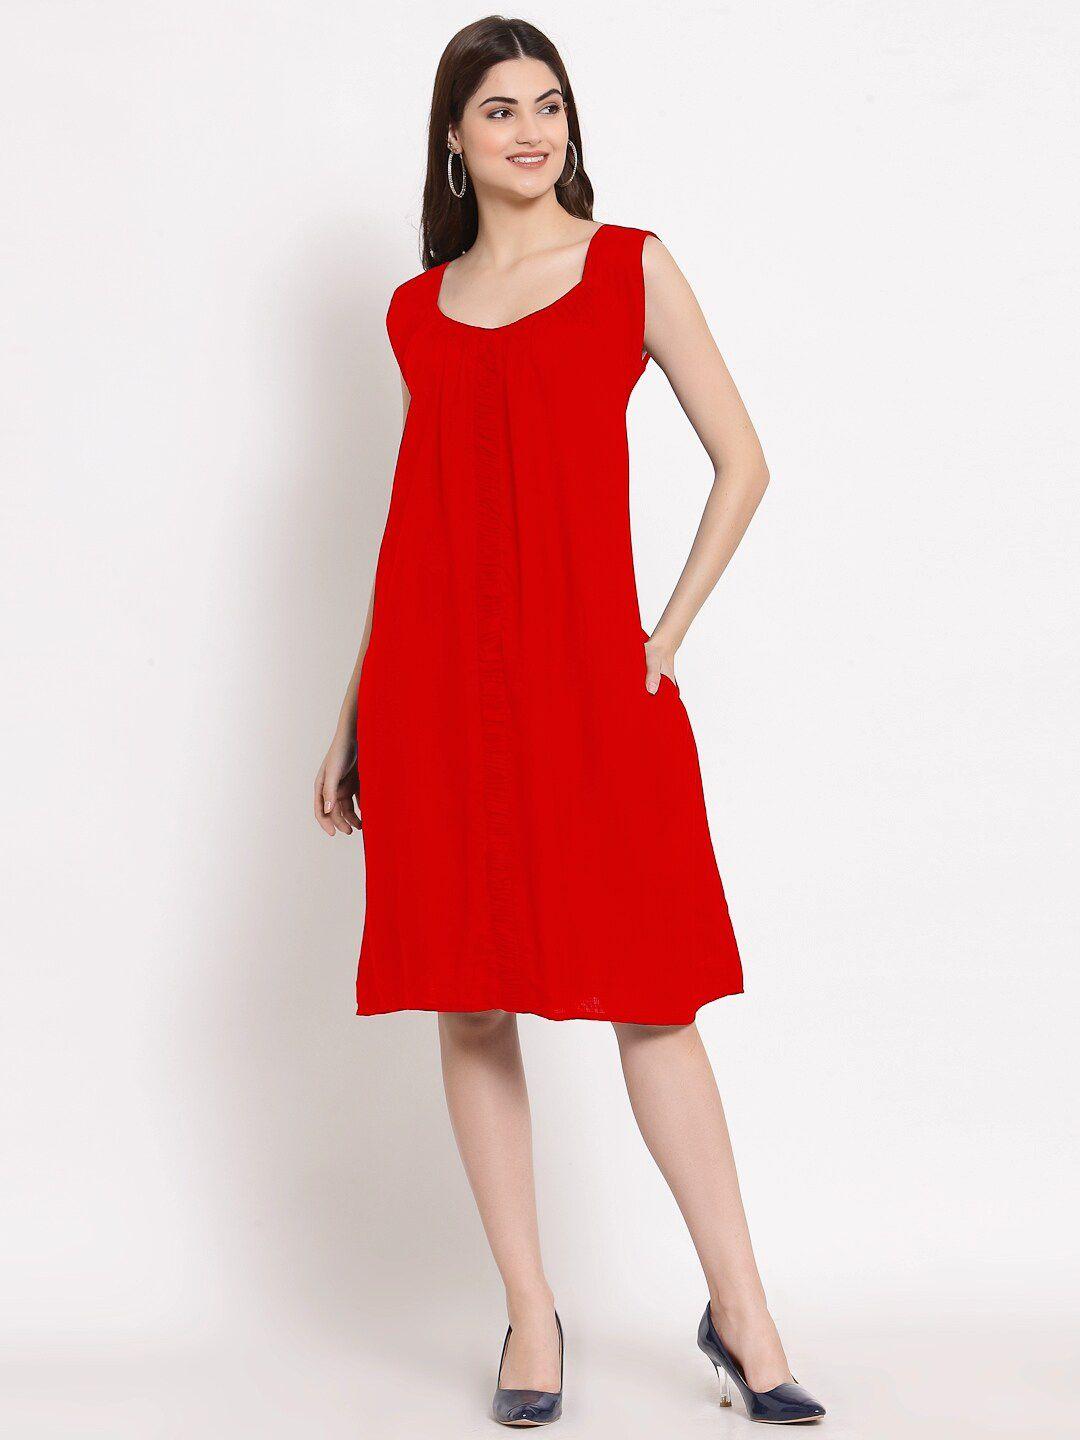 patrorna-women-red-nightdress